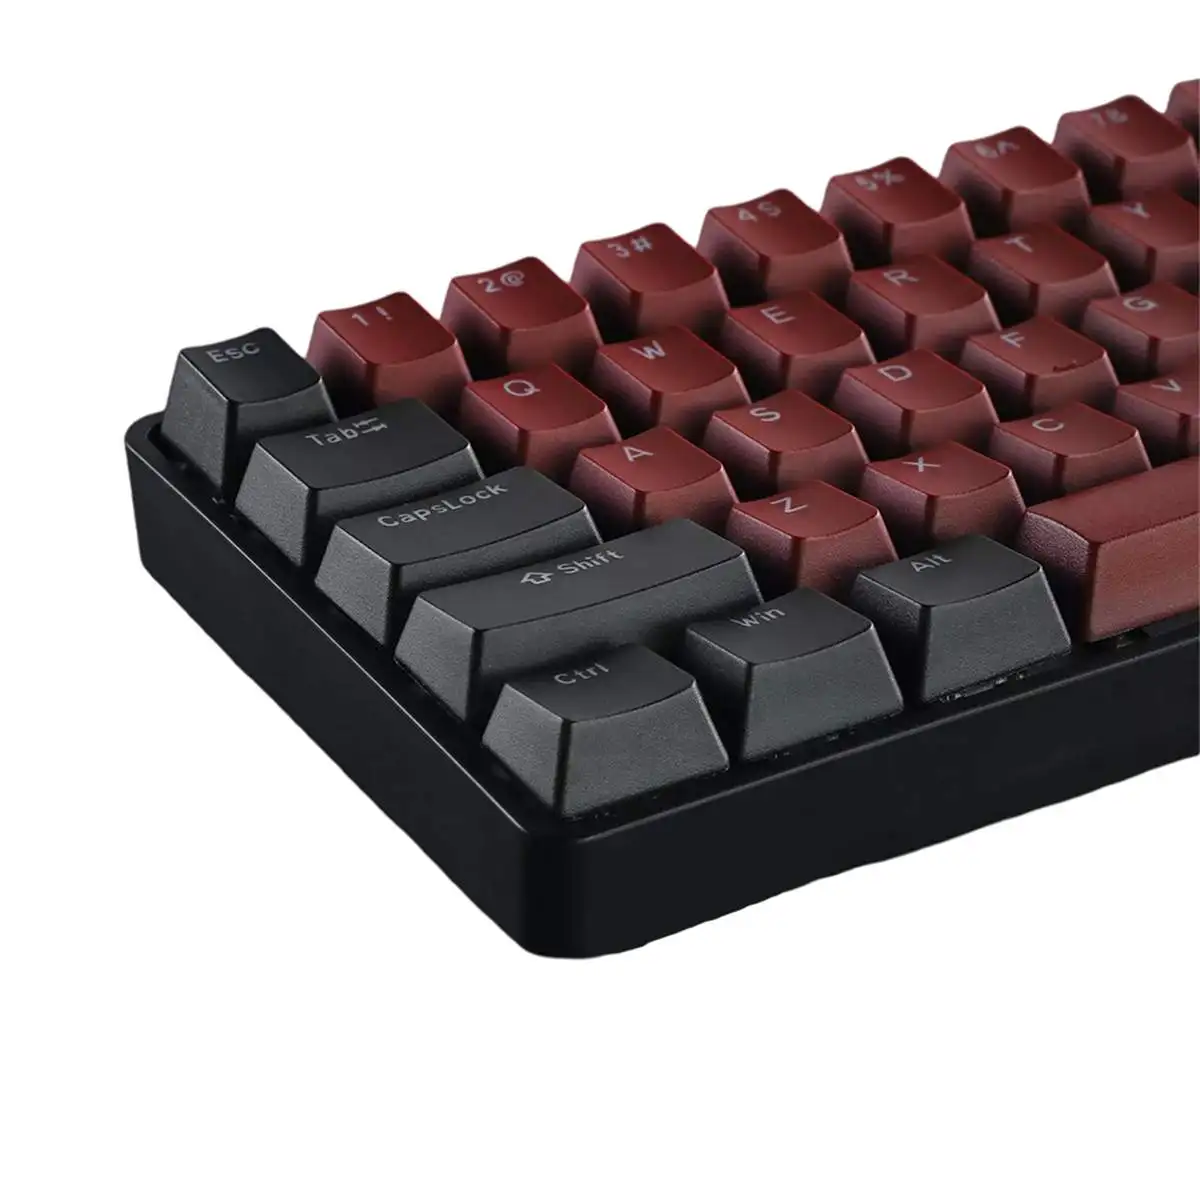 TMKB GK61 Mechanical Gaming Mini Keyboard Bluetooth 5.1 Type-C RGB  Hot-Swappable Wireless 60%Keyboard - AliExpress